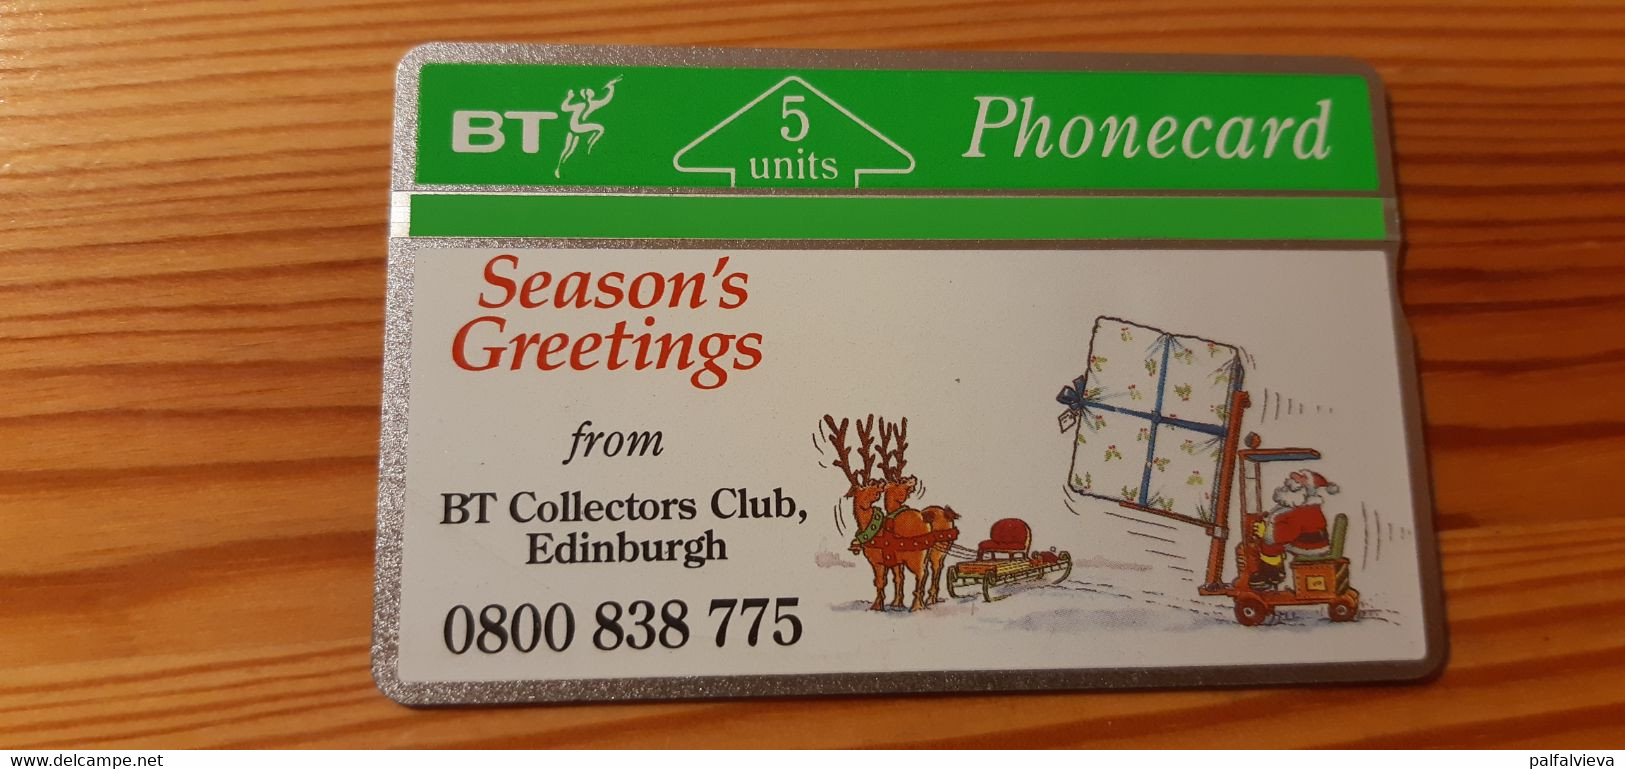 Phonecard United Kingdom, BT 171E - Christmas - BT Commemorative Issues